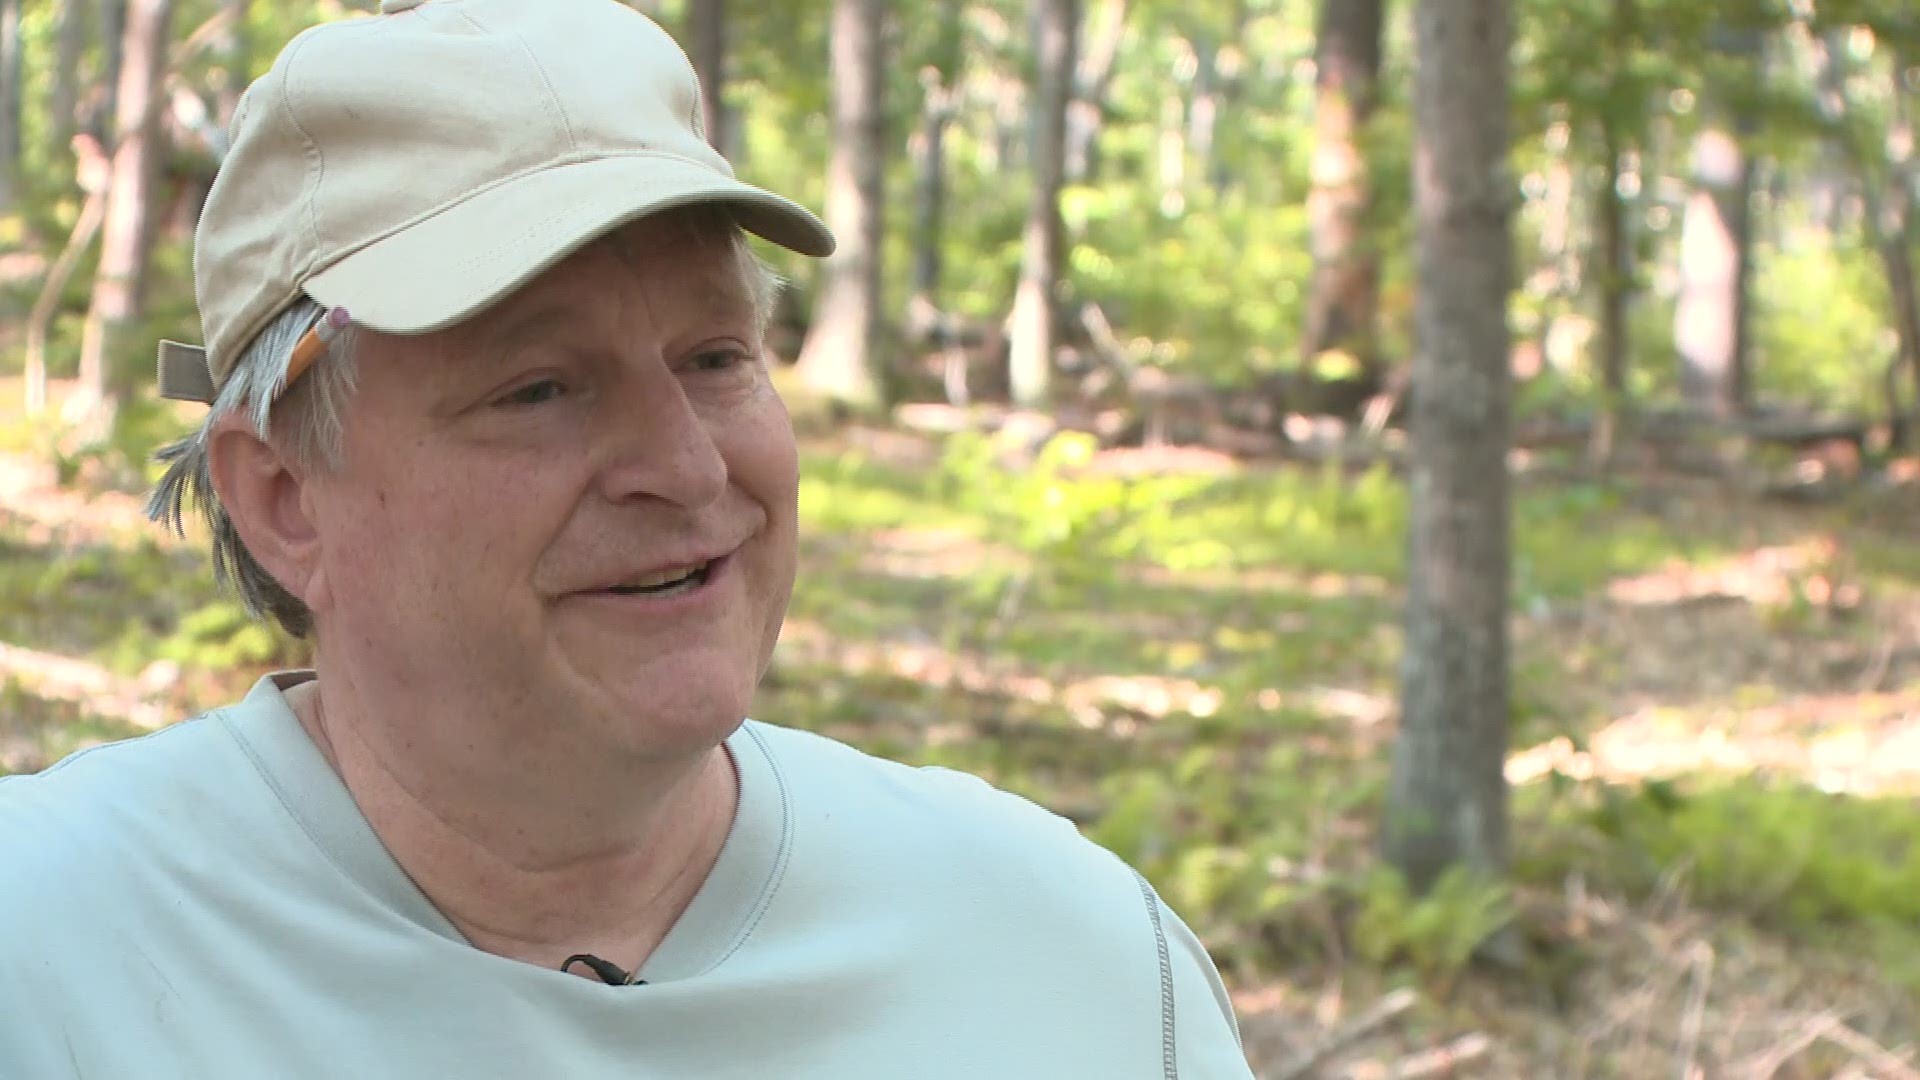 Gordon Johnson,  Citizen Scientist talks with NEWS CENTER Maine's Vivien Leigh about the important work of tracking ticks across the vast Maine landscape